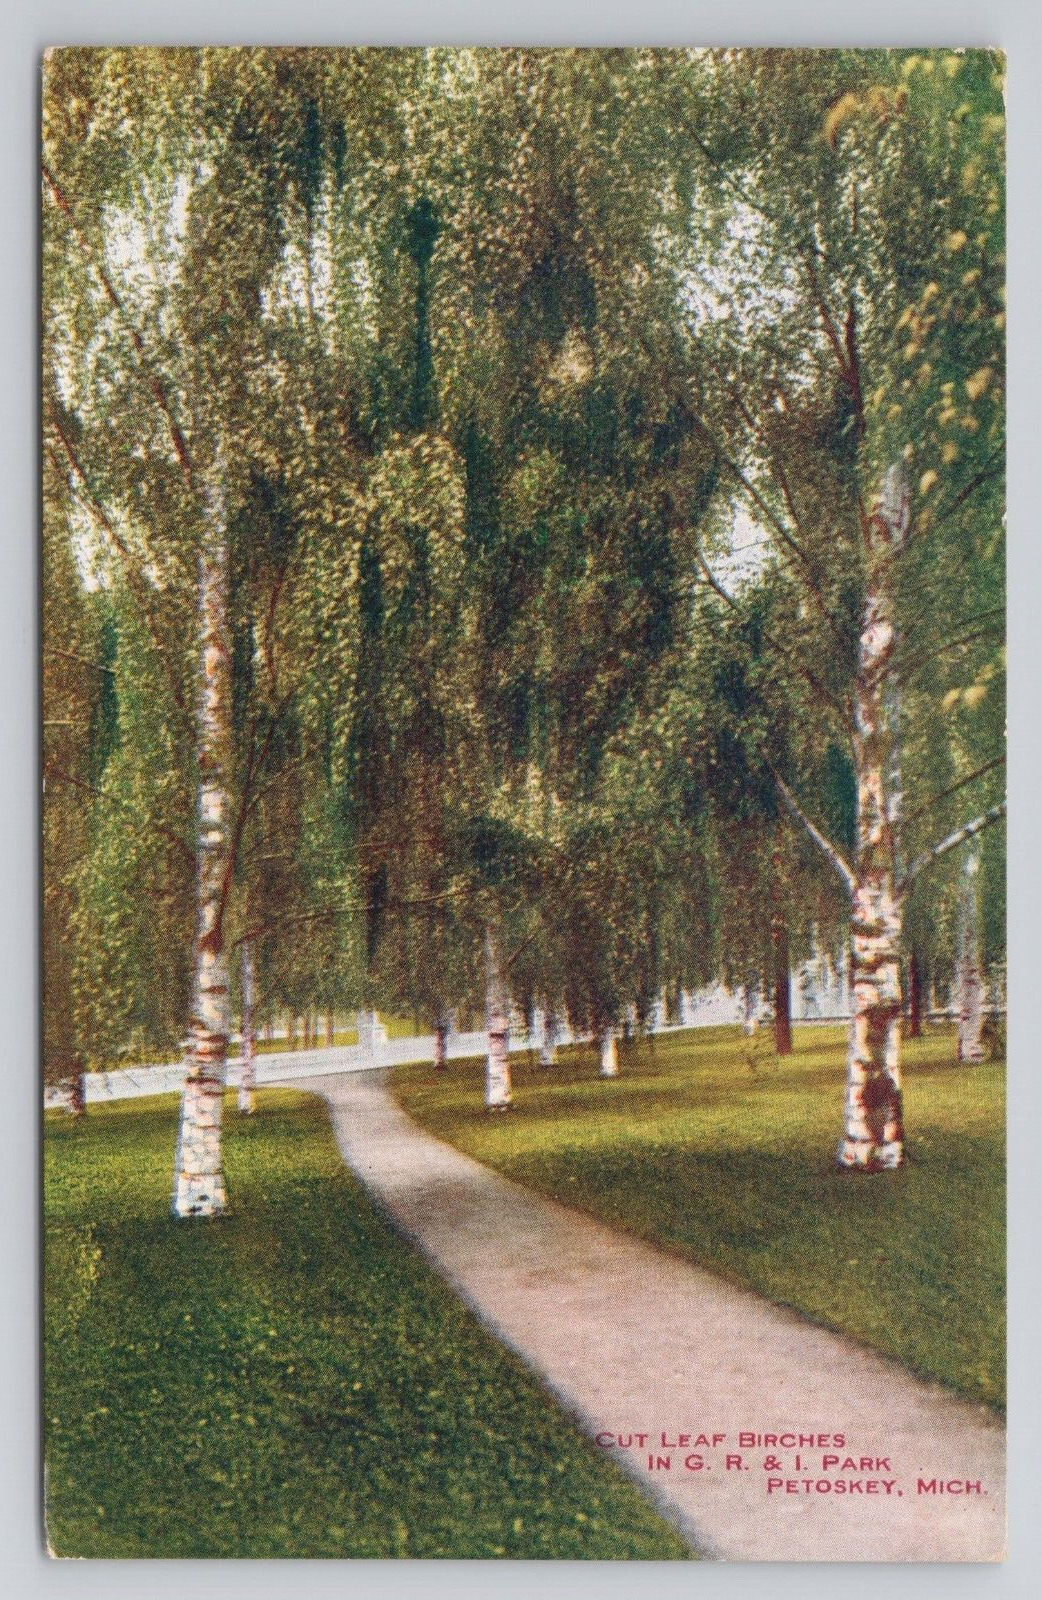 Cut Leaf Birches Park Petoskey Michigan c1910 Antique Postcard